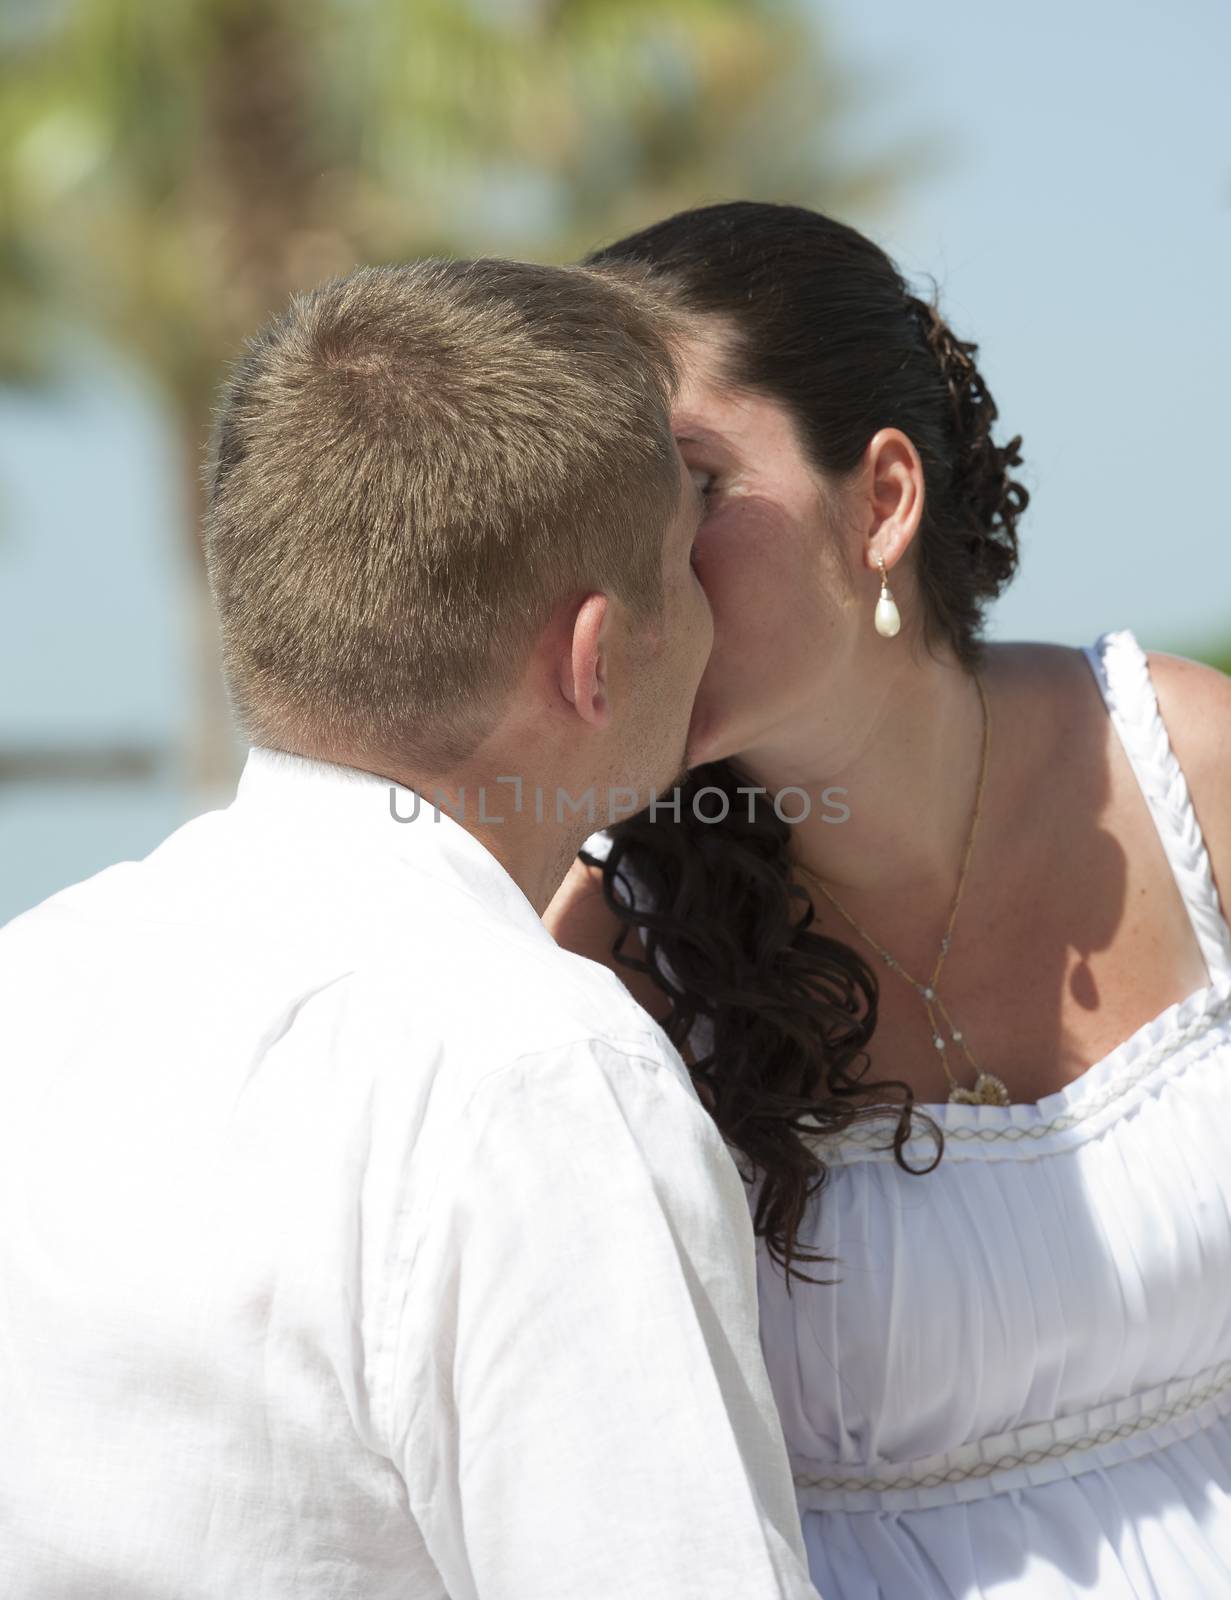 Newlyweds having a romantic kiss by paulvinten